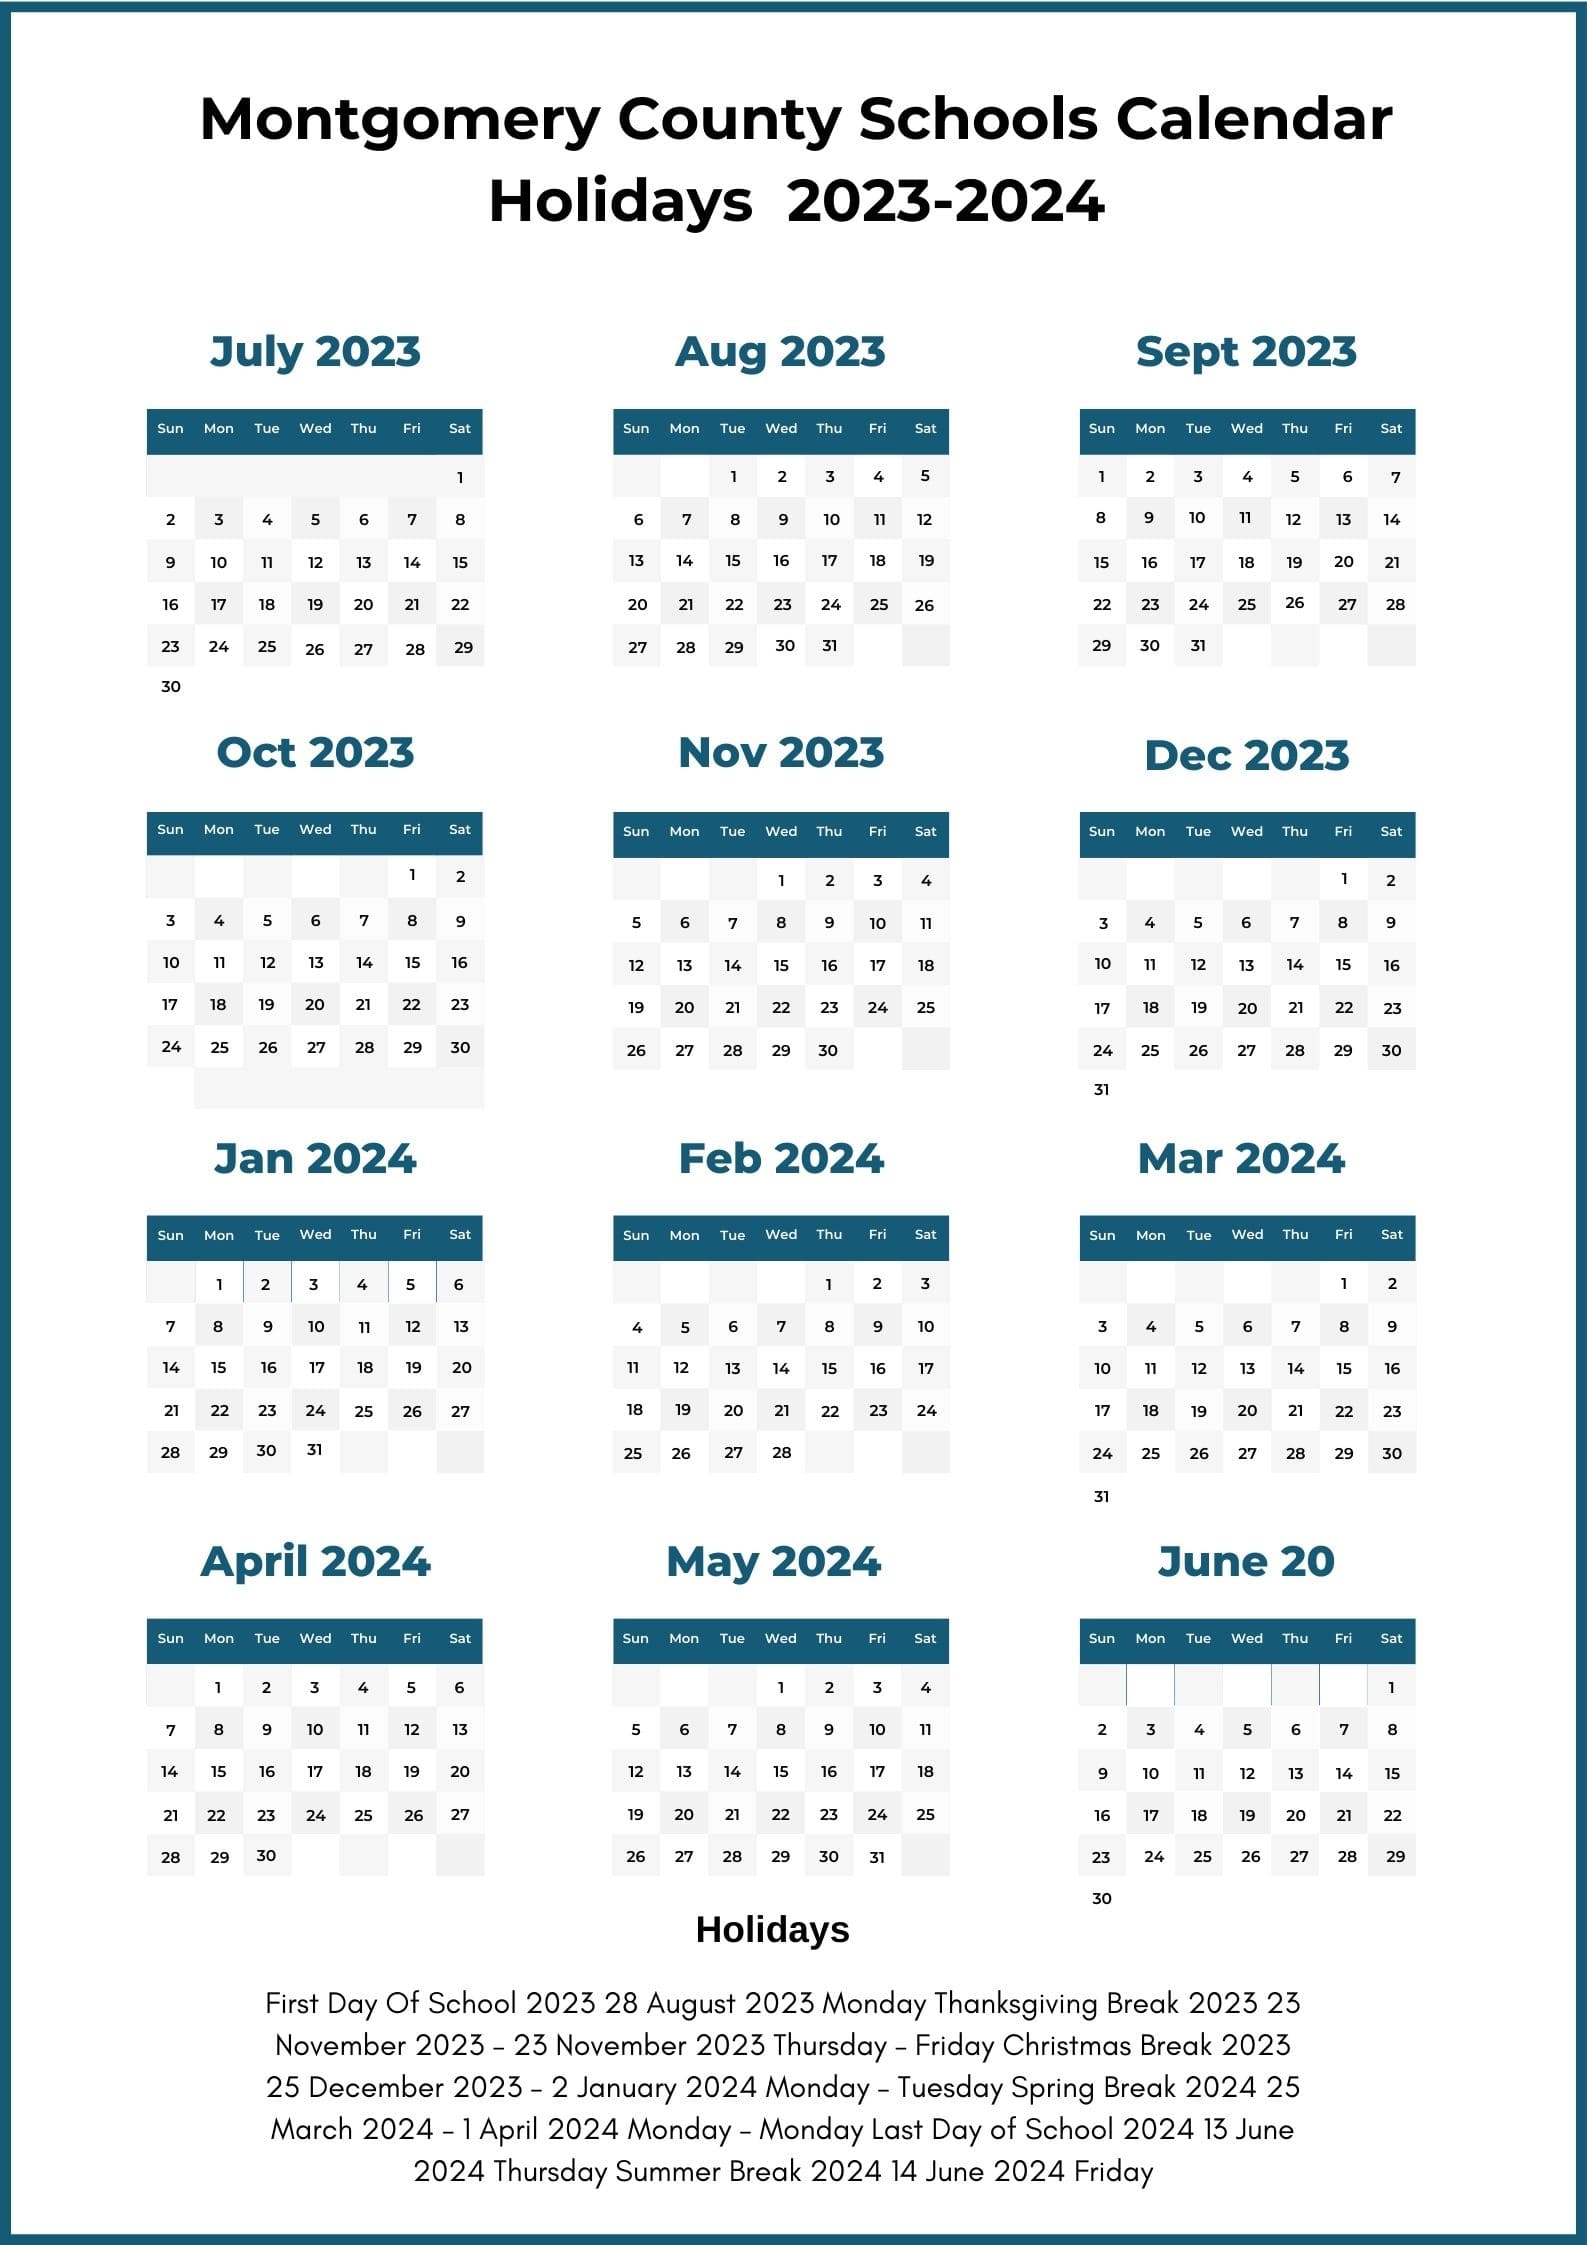 Montgomery County Schools Calendar Holidays 2023-2024 [MCPS]